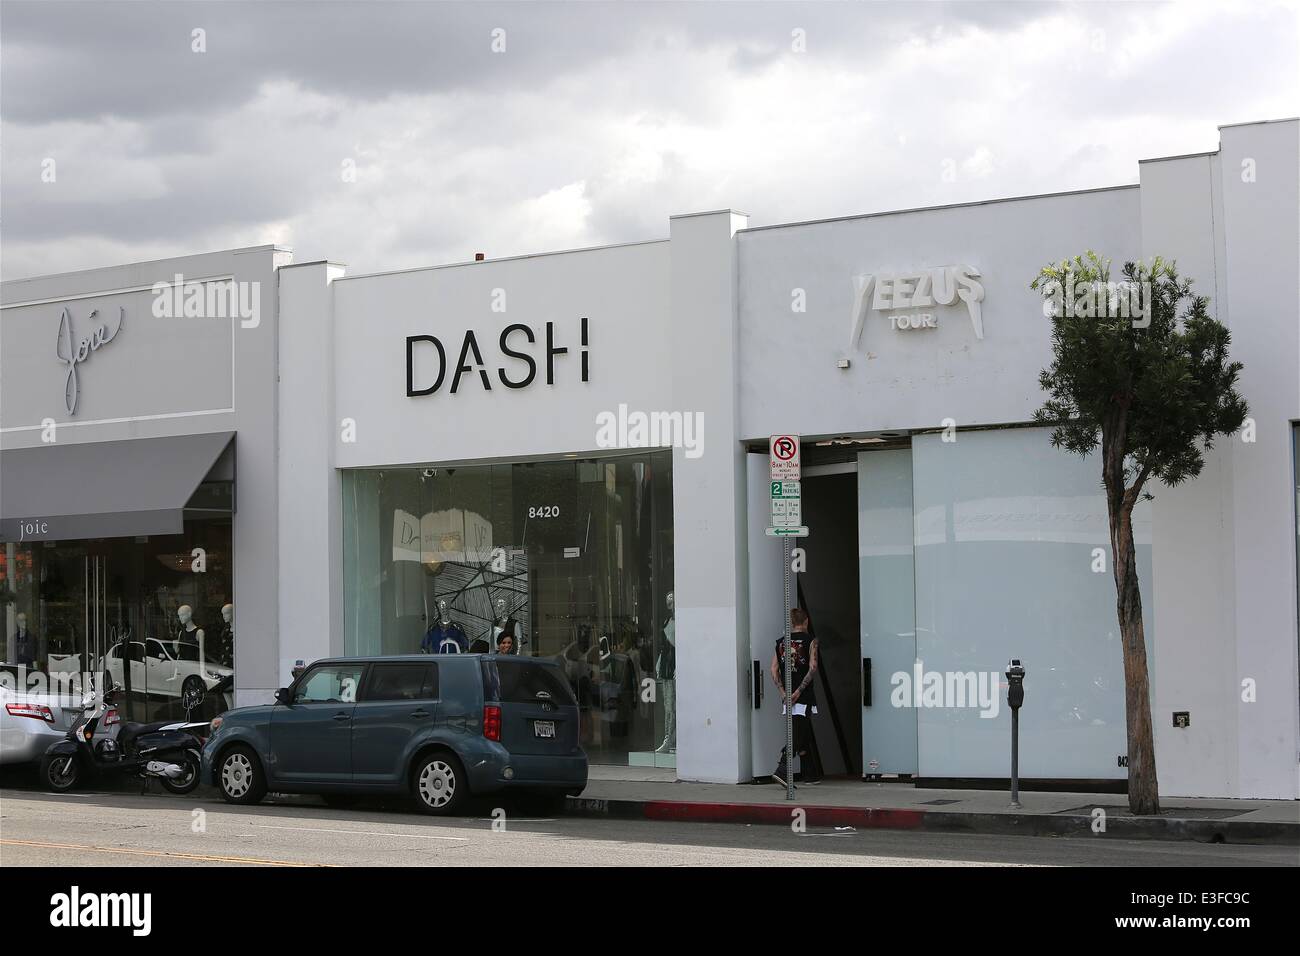 DASH Store on Melrose Avenue - Glitterati Tours